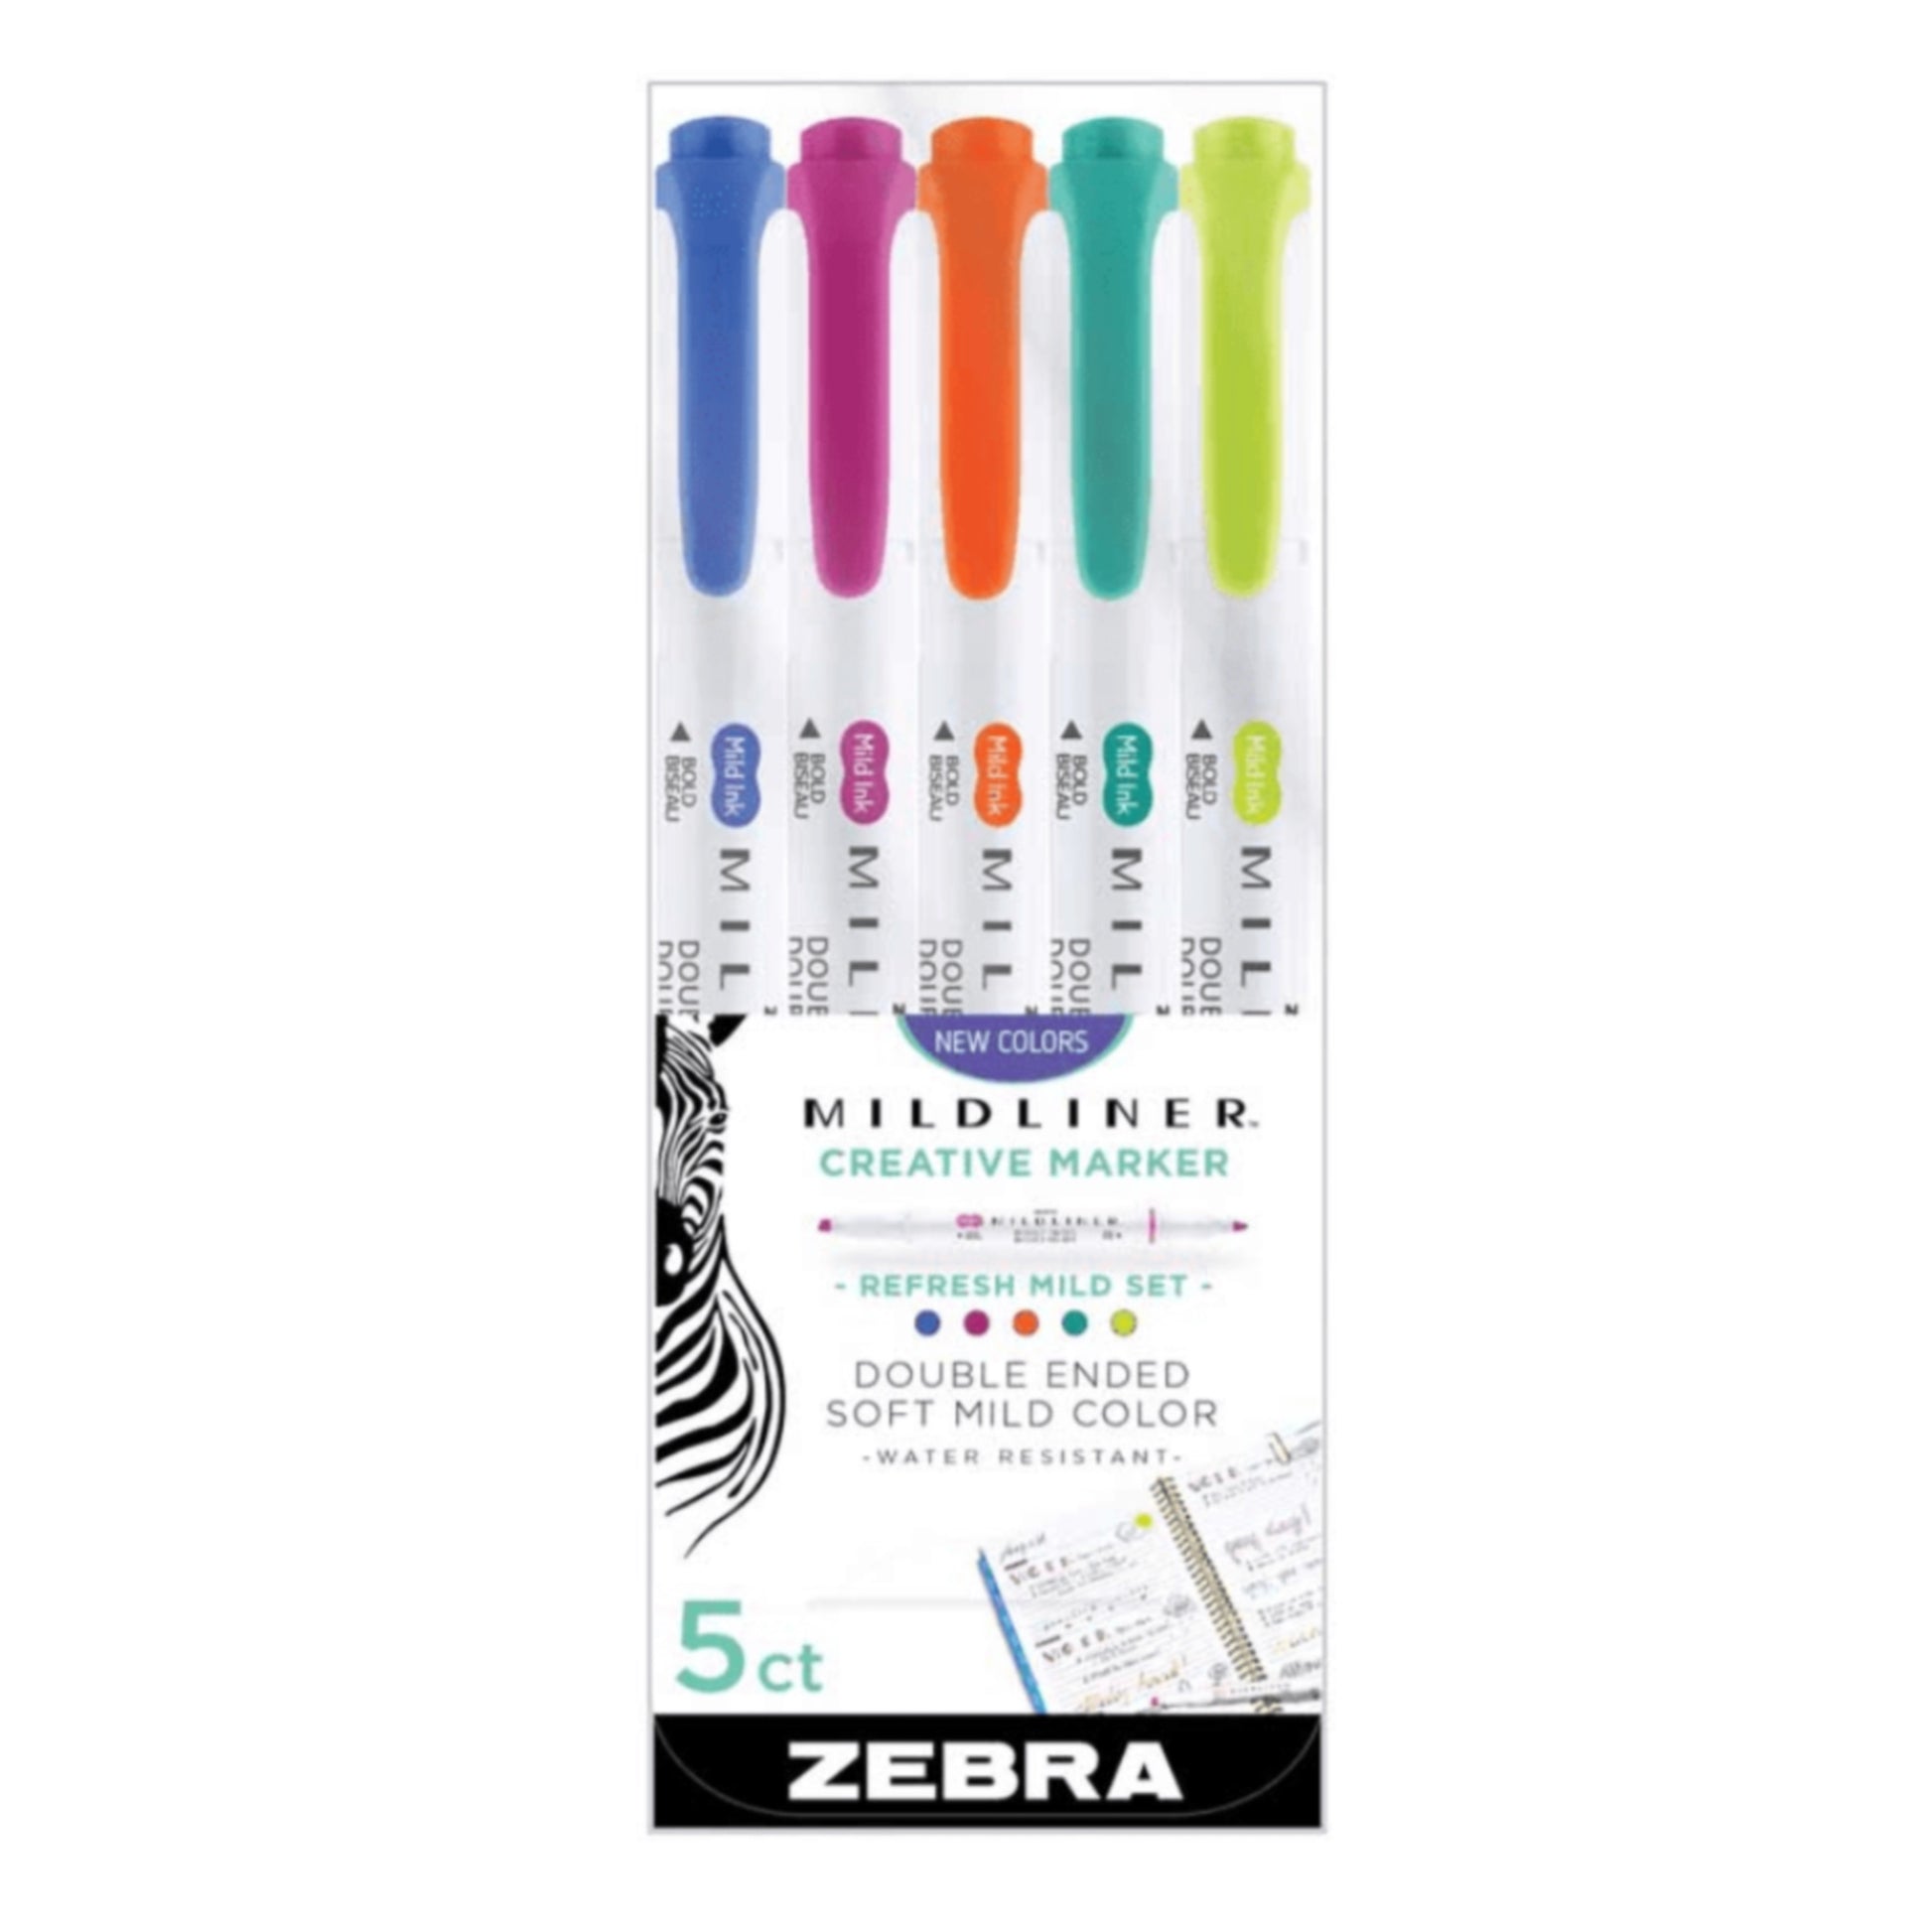 Zebra Mildliner Highlighters - Set of 5 - Refresh Mild by Zebra - K. A. Artist Shop